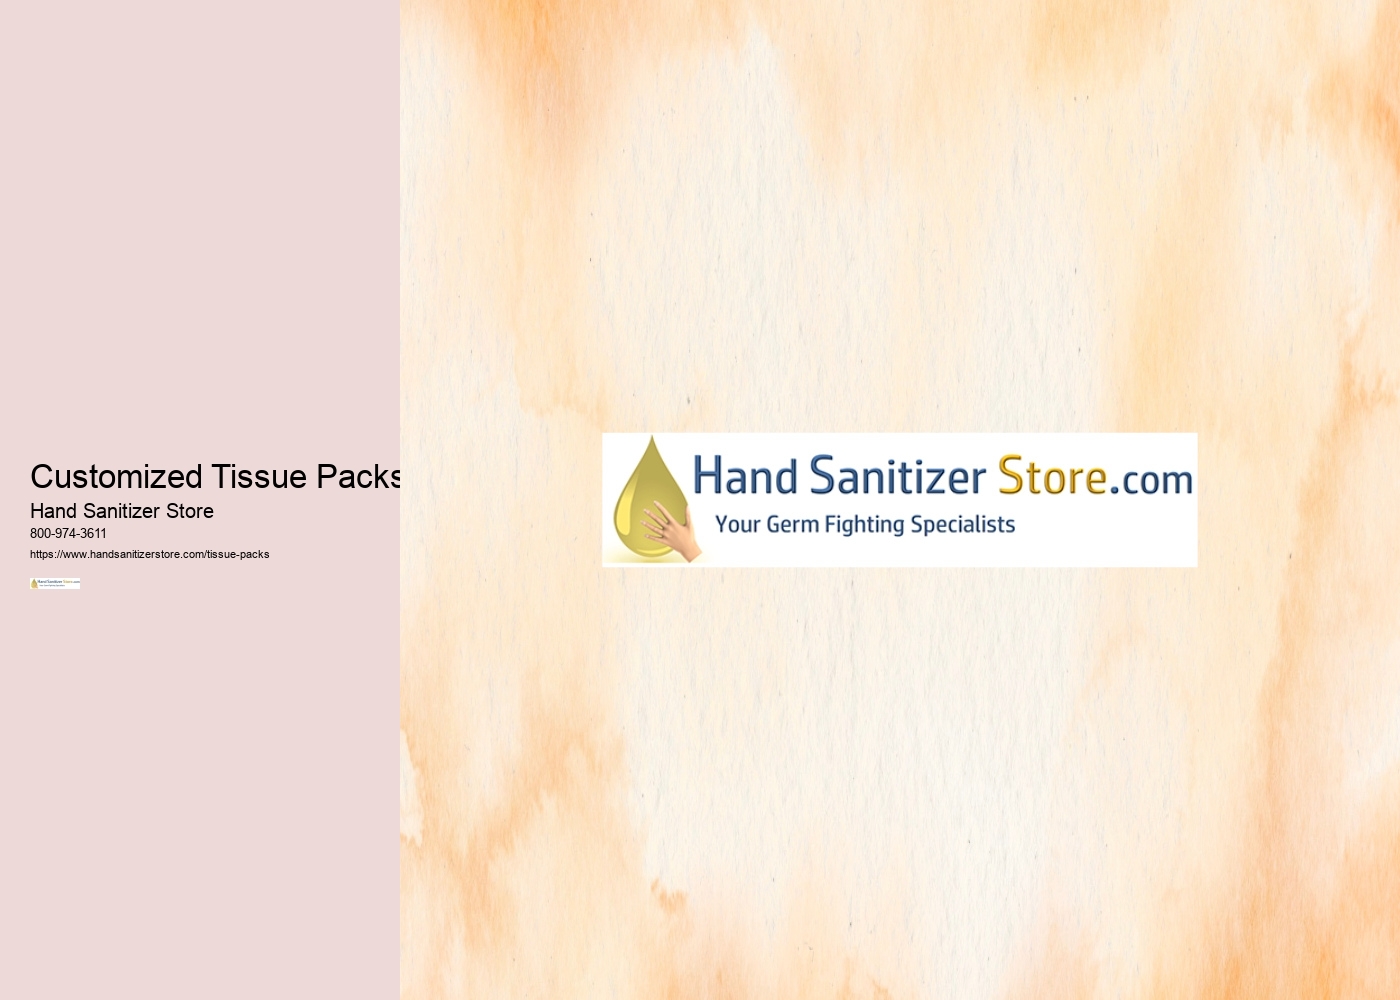 Customized Tissue Packs